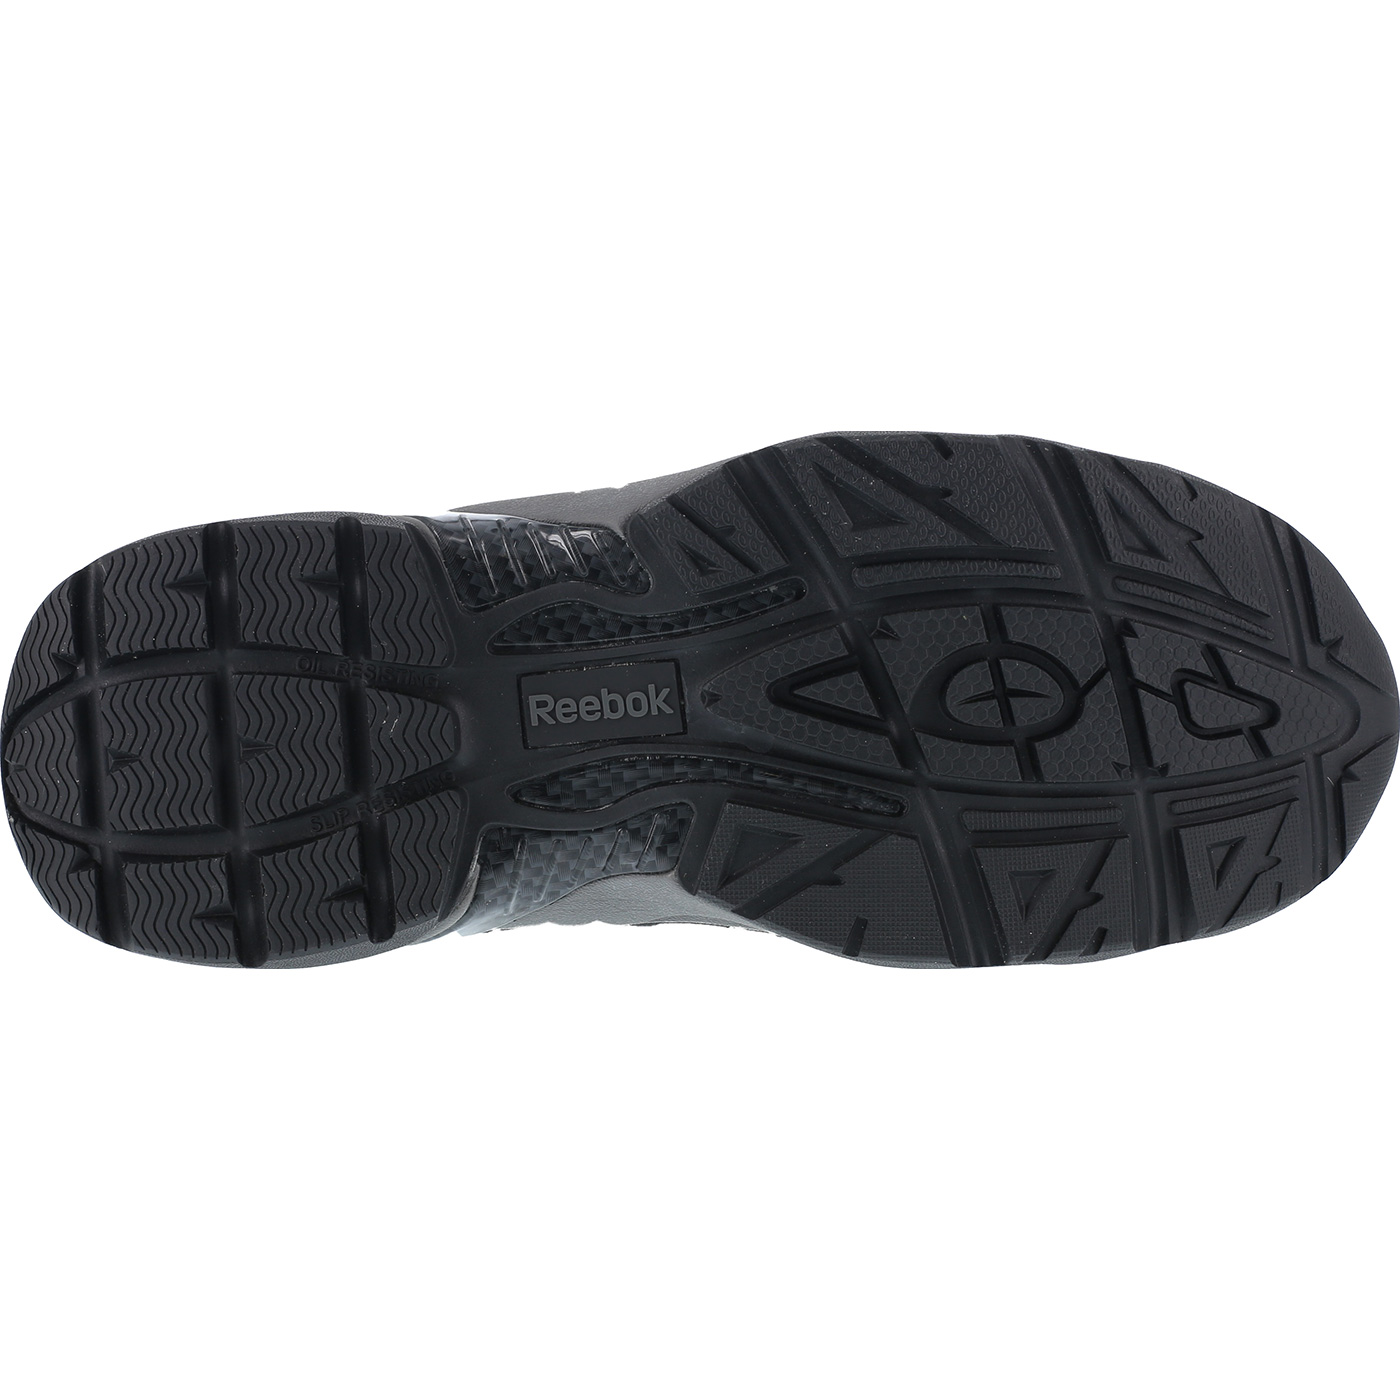 Reebok Beamer Composite Toe Waterproof Work Hiker Size 8(W) - image 2 of 4